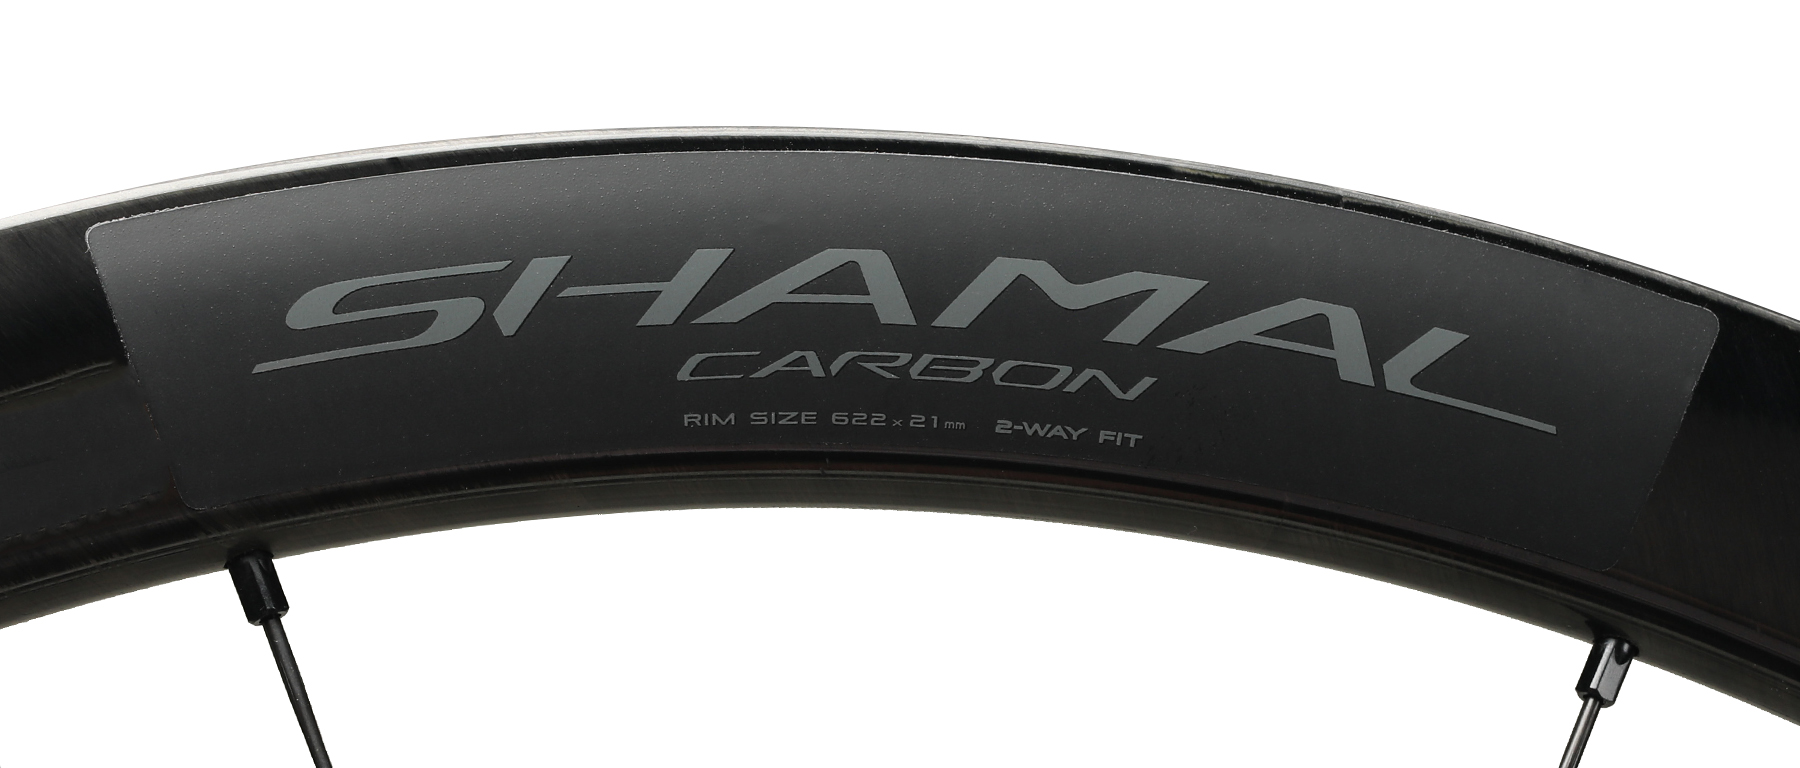 Campagnolo Shamal Carbon Disc Wheelset